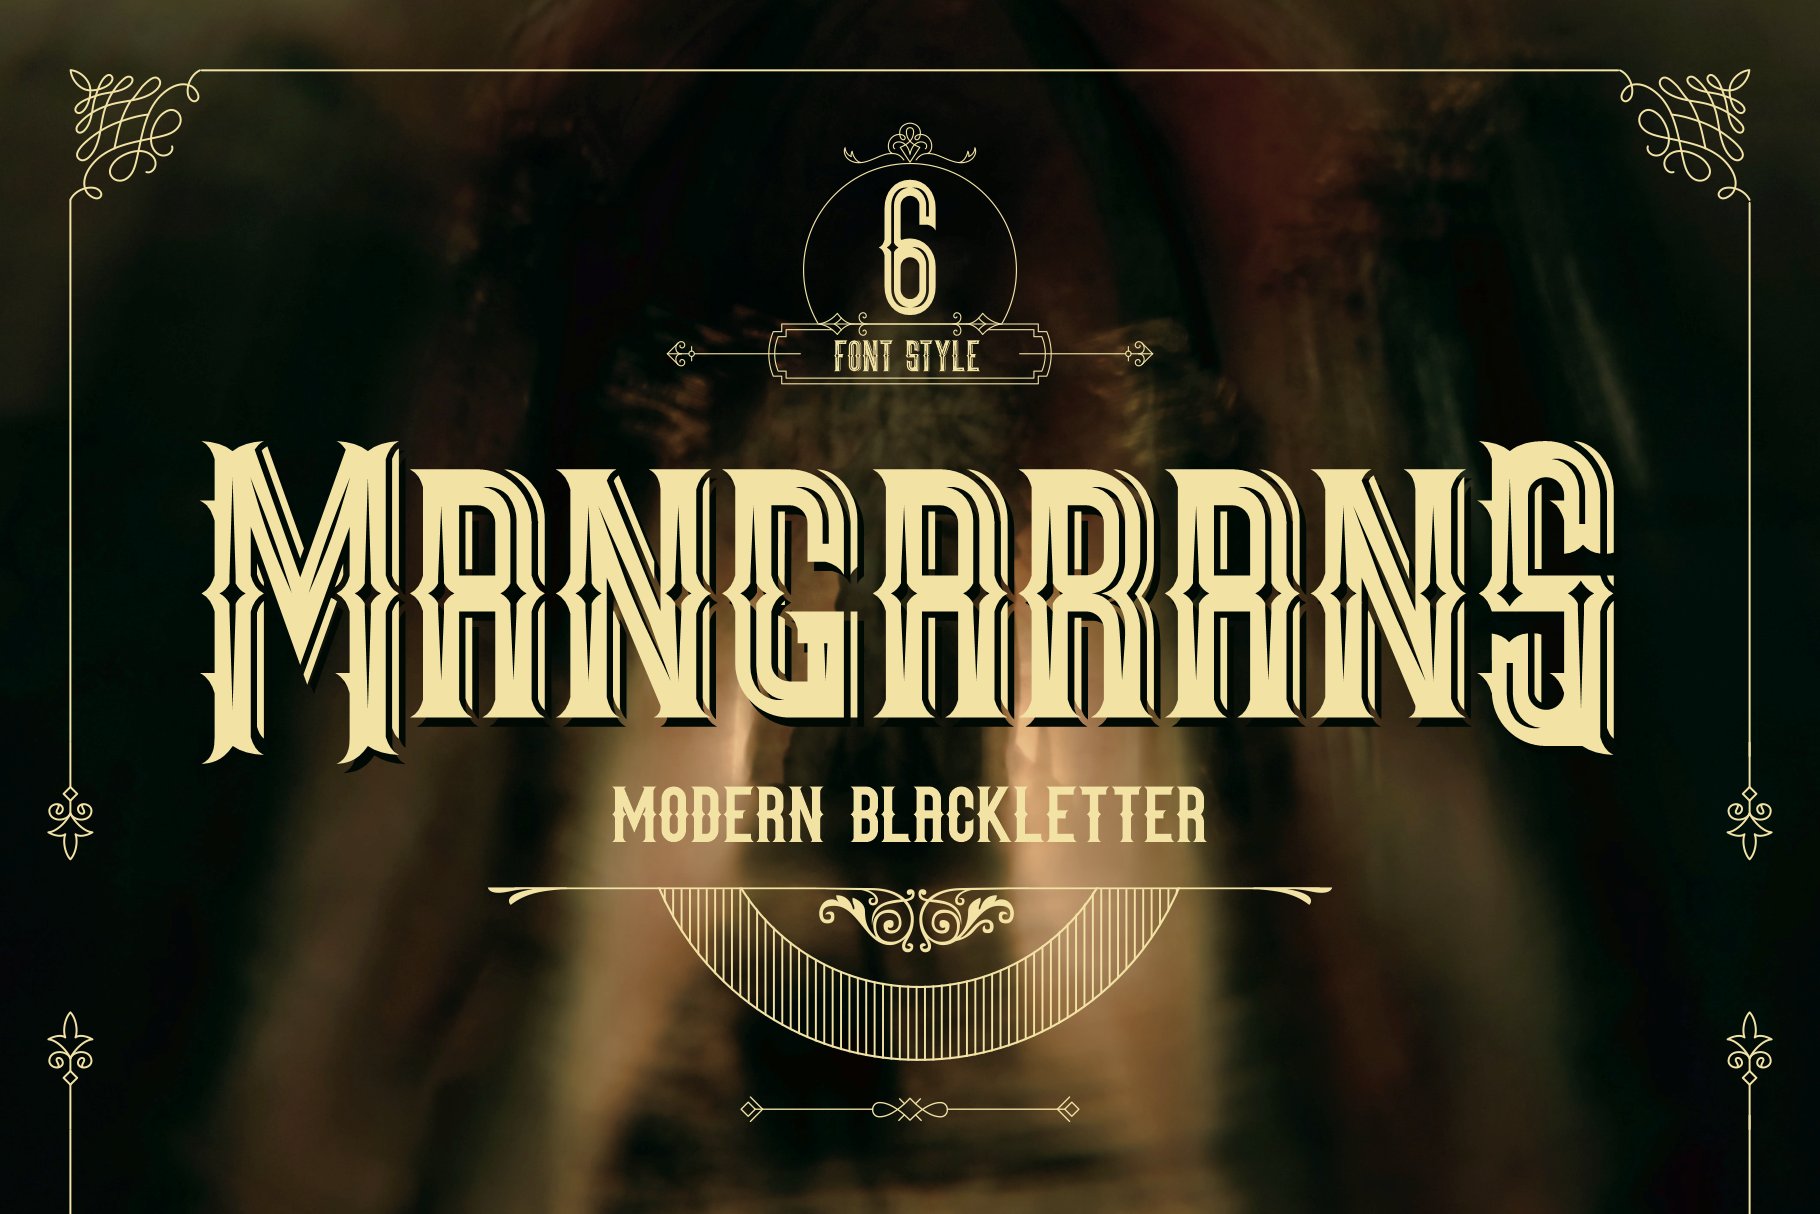 Mangarans | 6 Blackletter Series cover image.